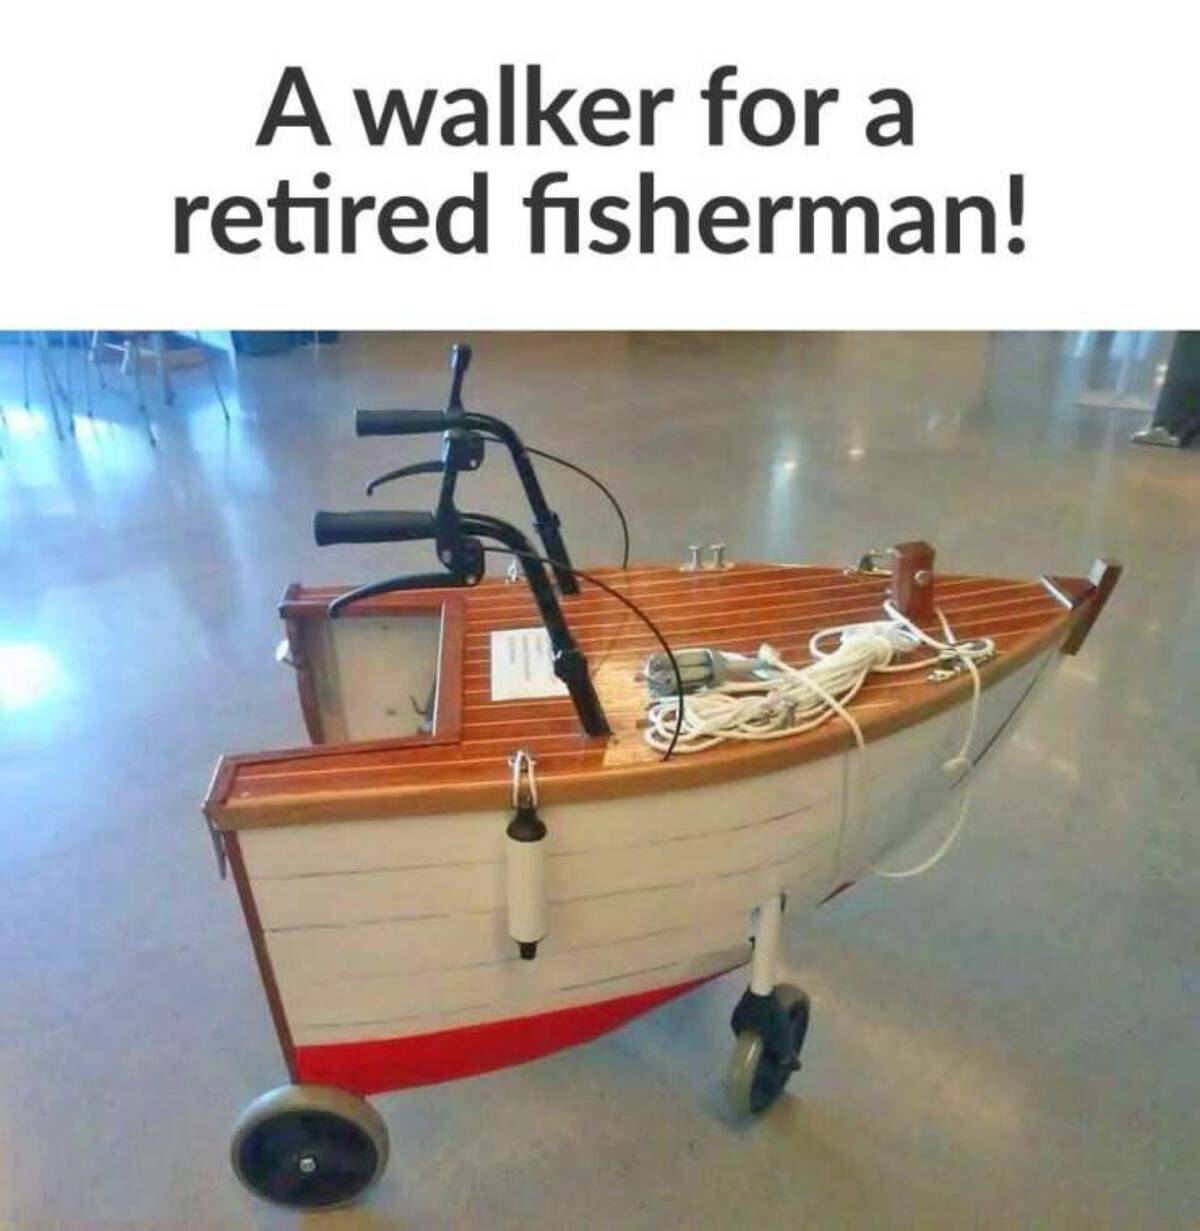 walker for retired fisherman - A walker for a retired fisherman! 11